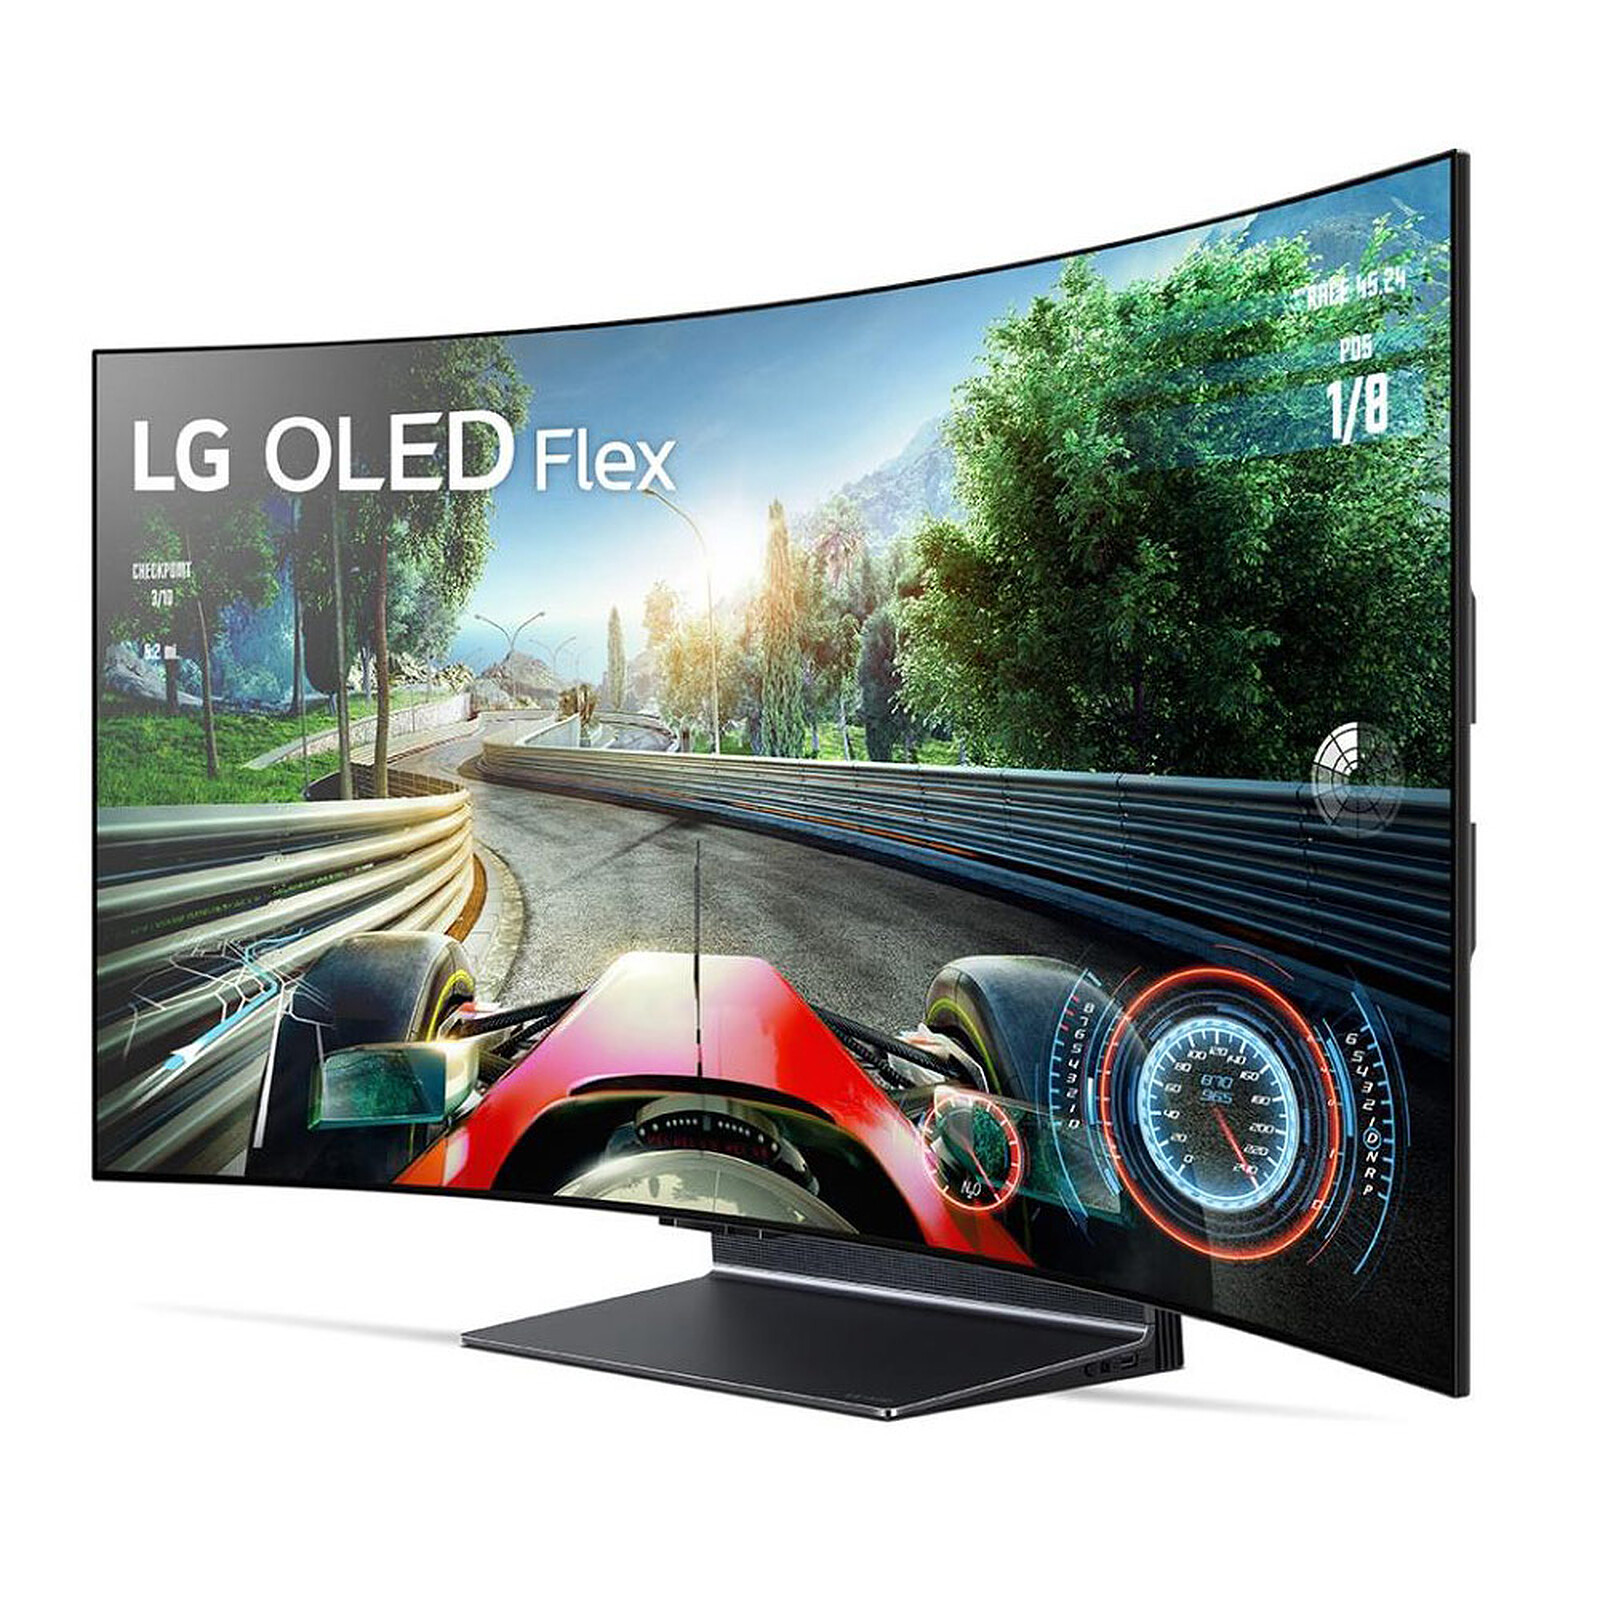 LG OLED Flex 42LX3 - TV - Garantie 3 ans LDLC